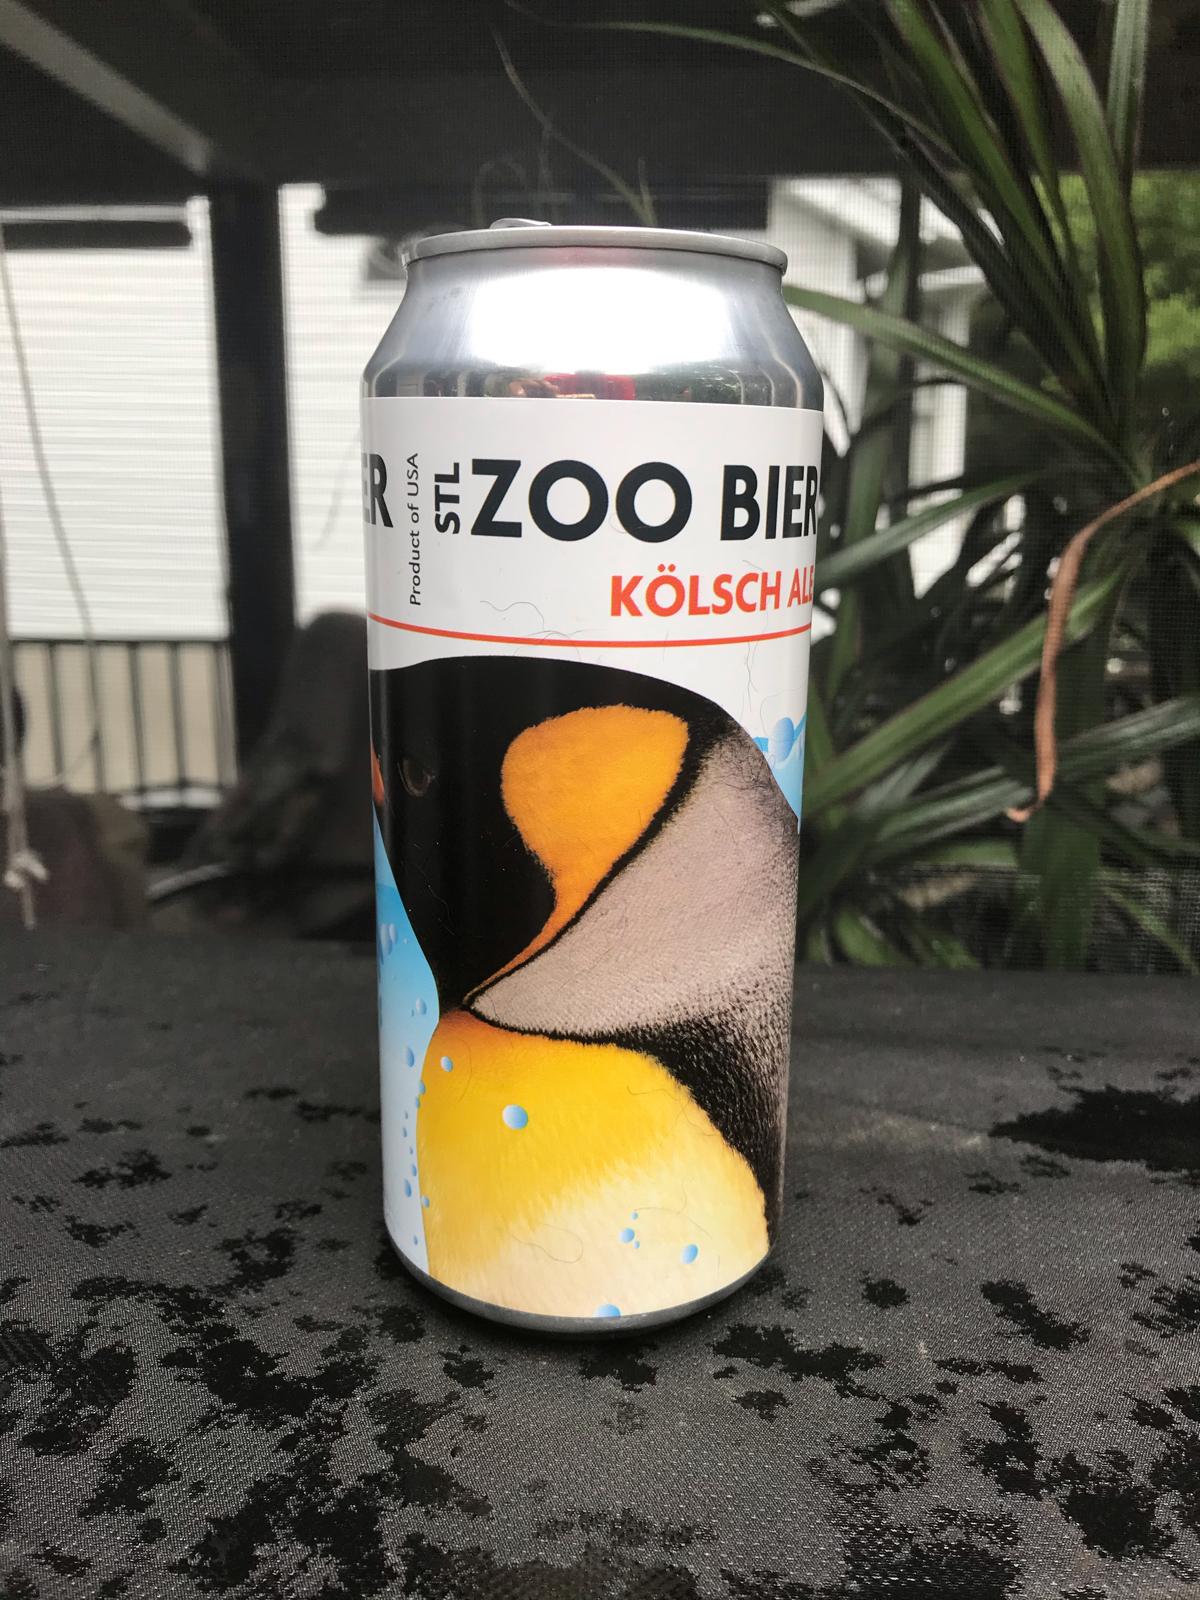 STL Zoo Bier (Collaboration with Saint Louis Zoo)